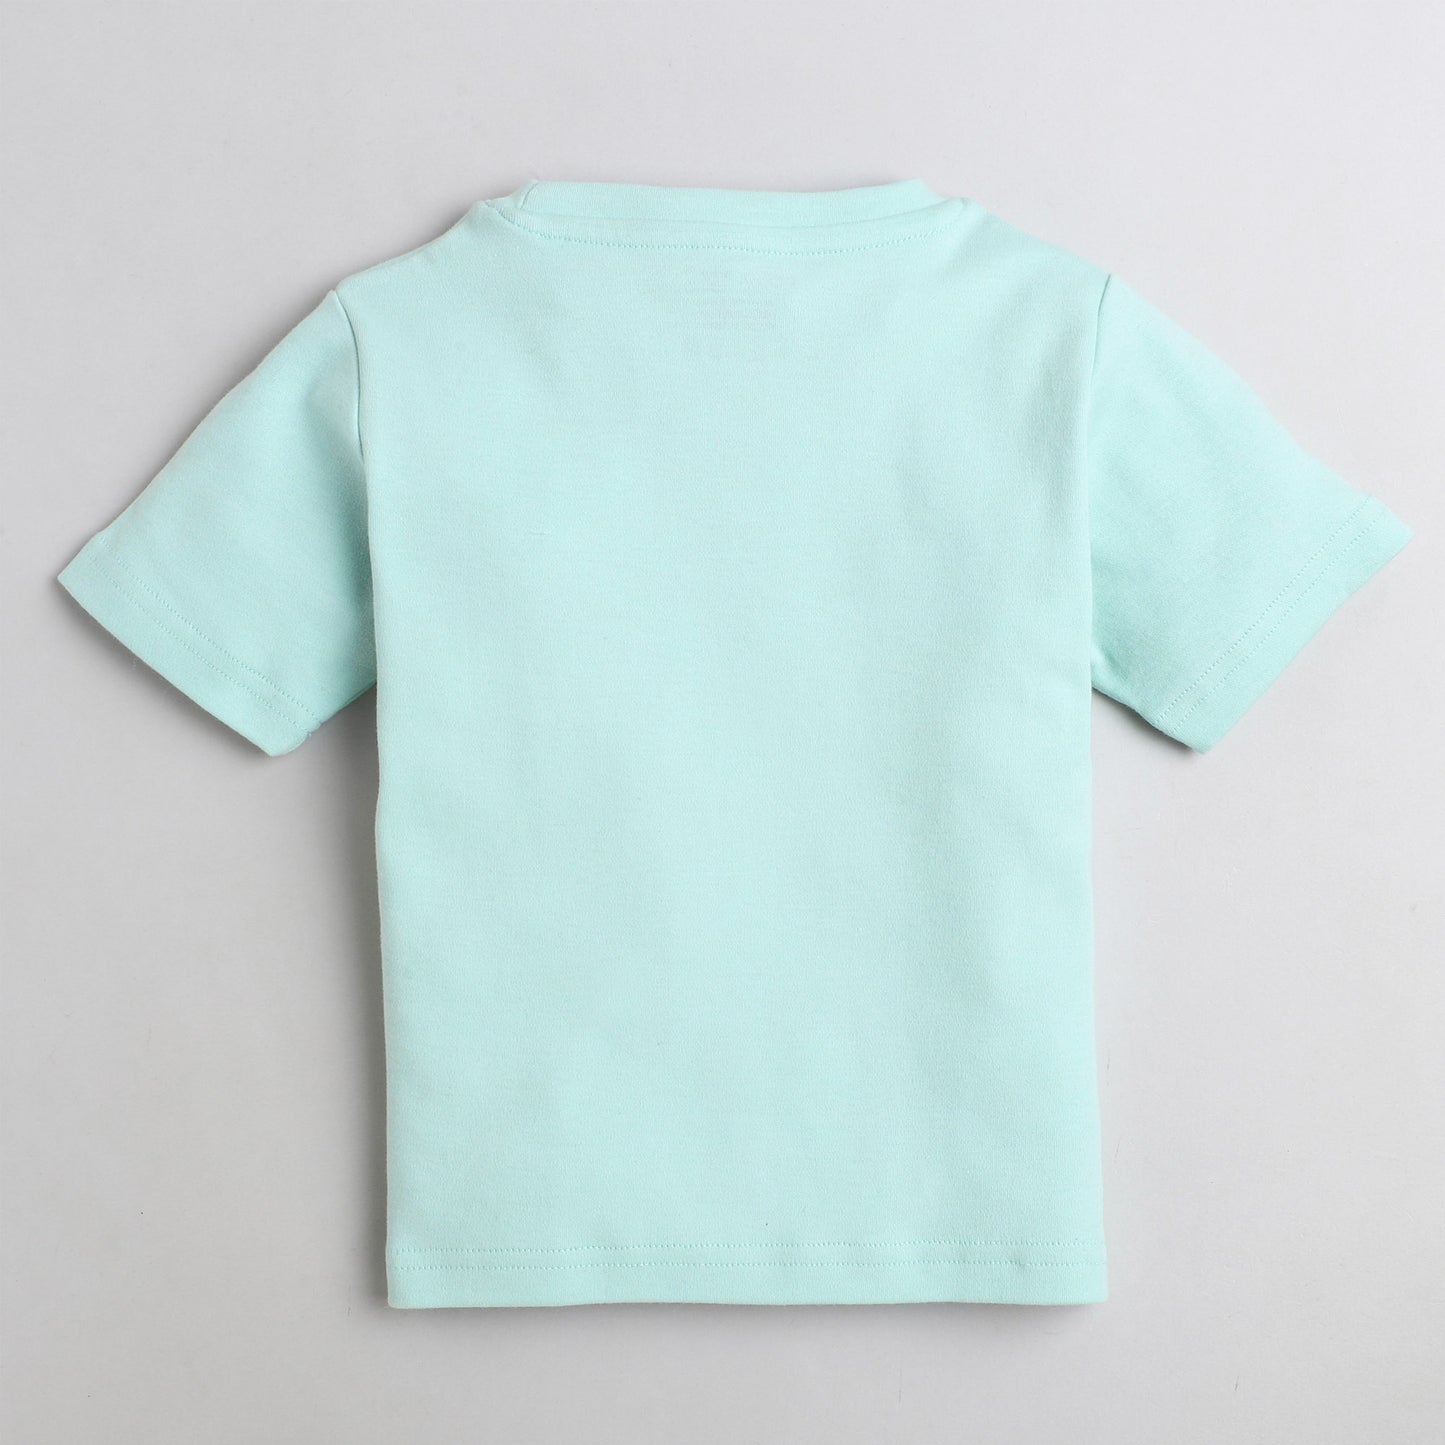 Polka Tots Half Sleeve T-Shirt It's Raining Bones And Dogs With Creative Pocket Print - Sea Green